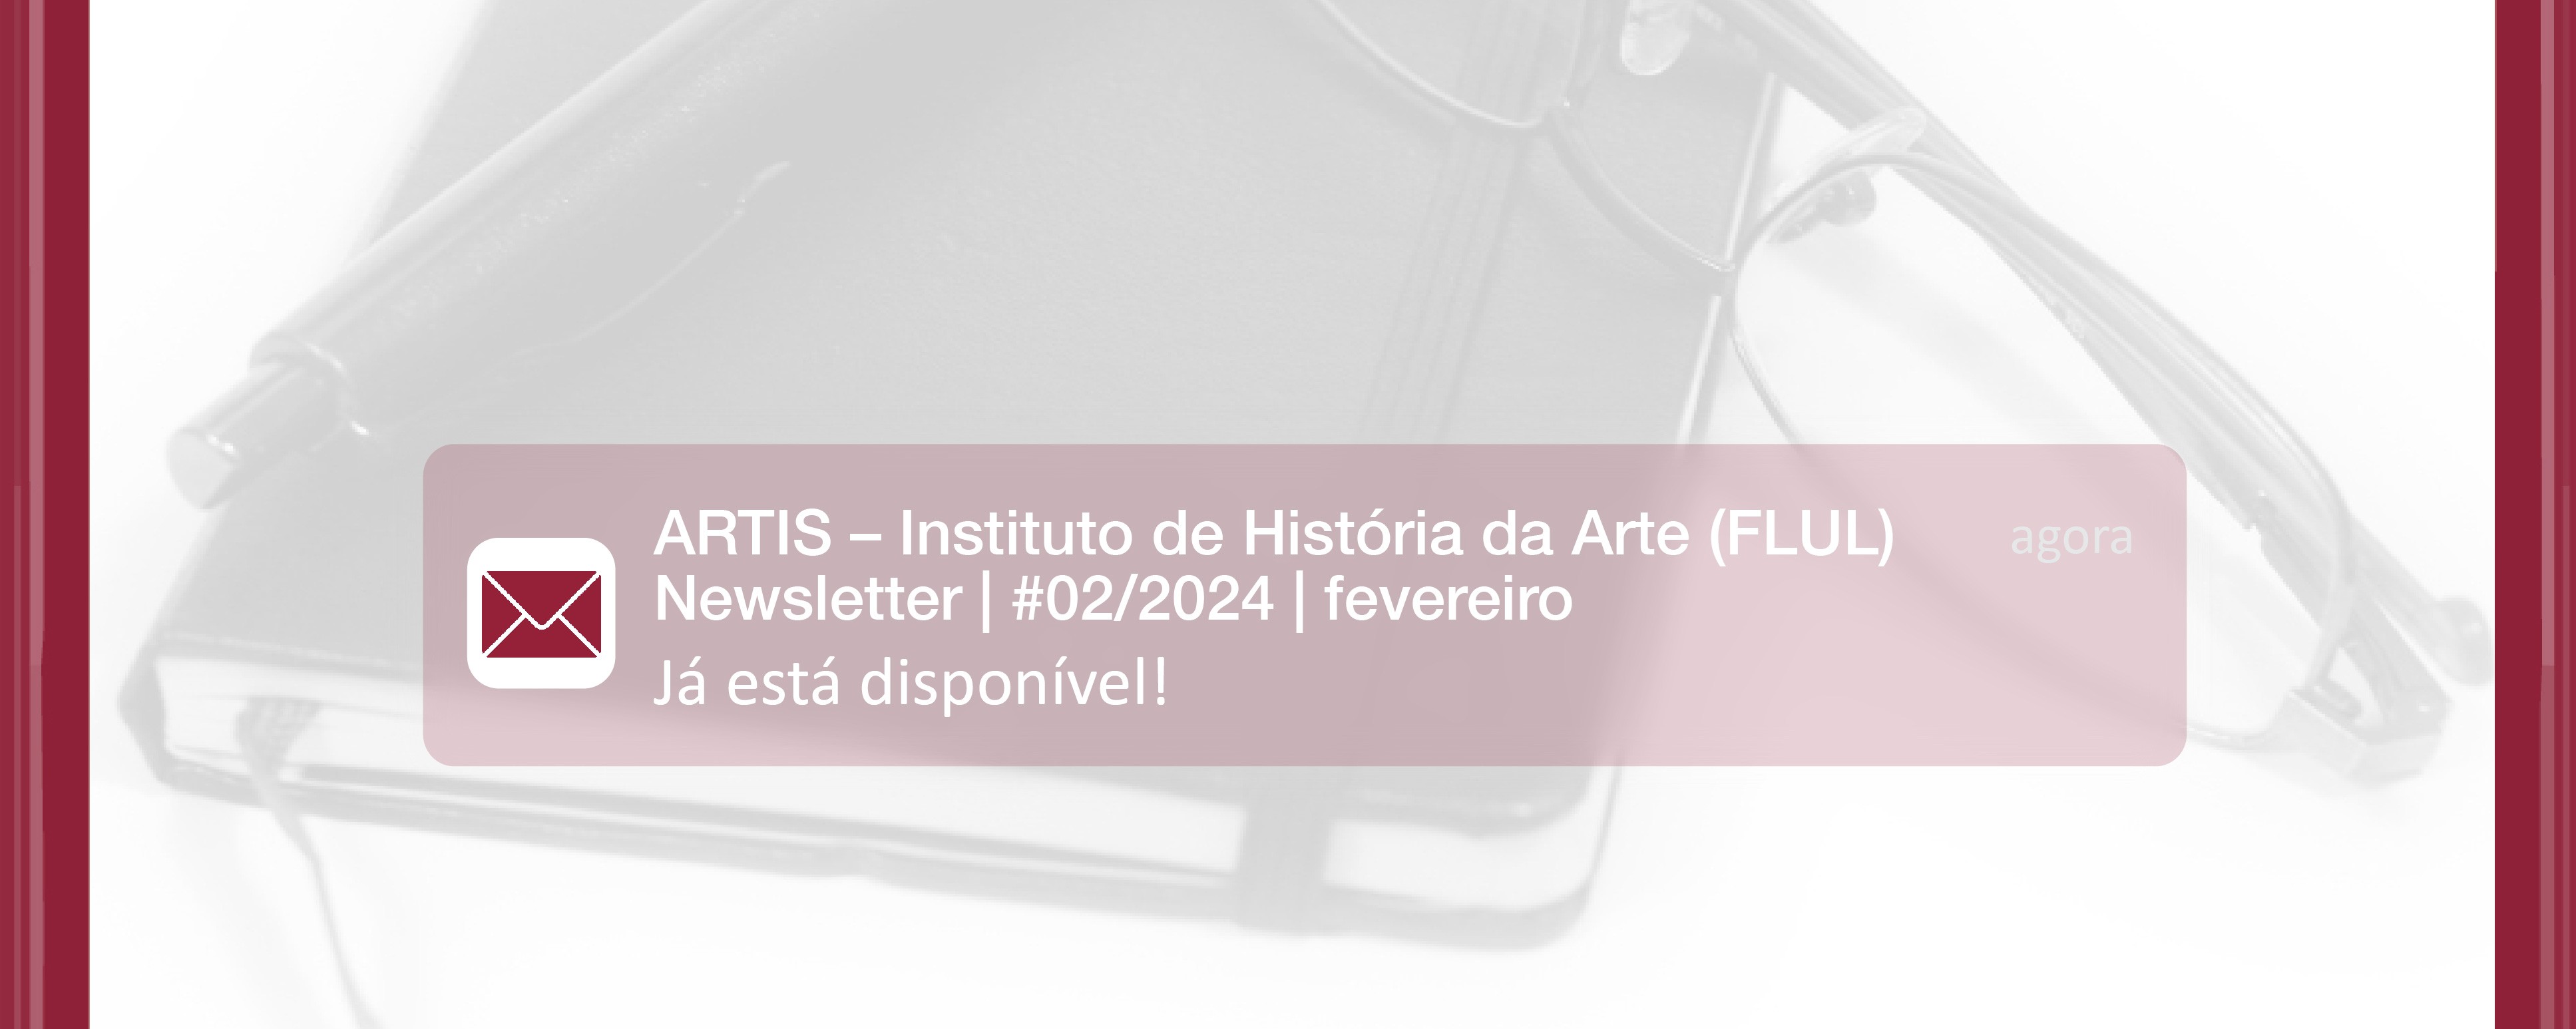 NEWSLETTER ARTI-IHA | #02/2024 | FEVEREIRO